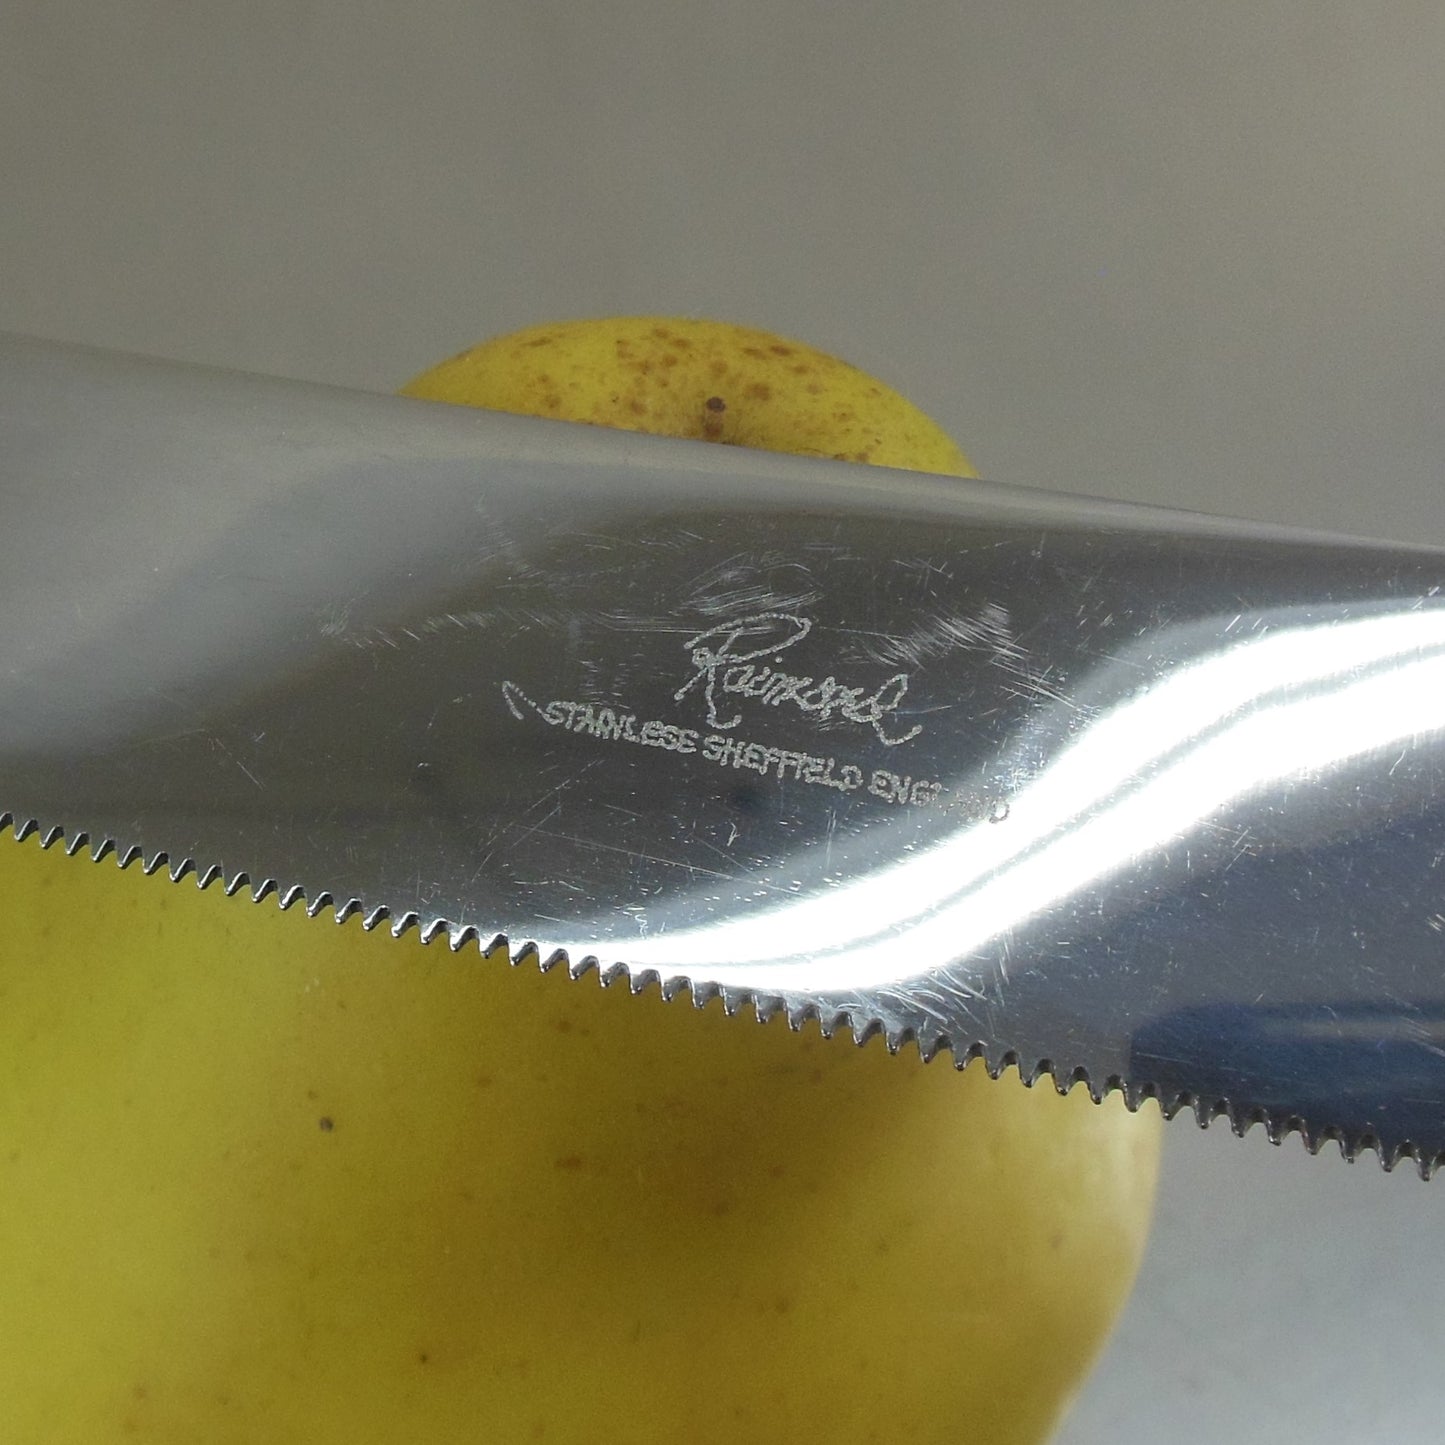 Raimond Sheffield England Sterling Handle Stainless Serrated Cake Knife Maker Mark